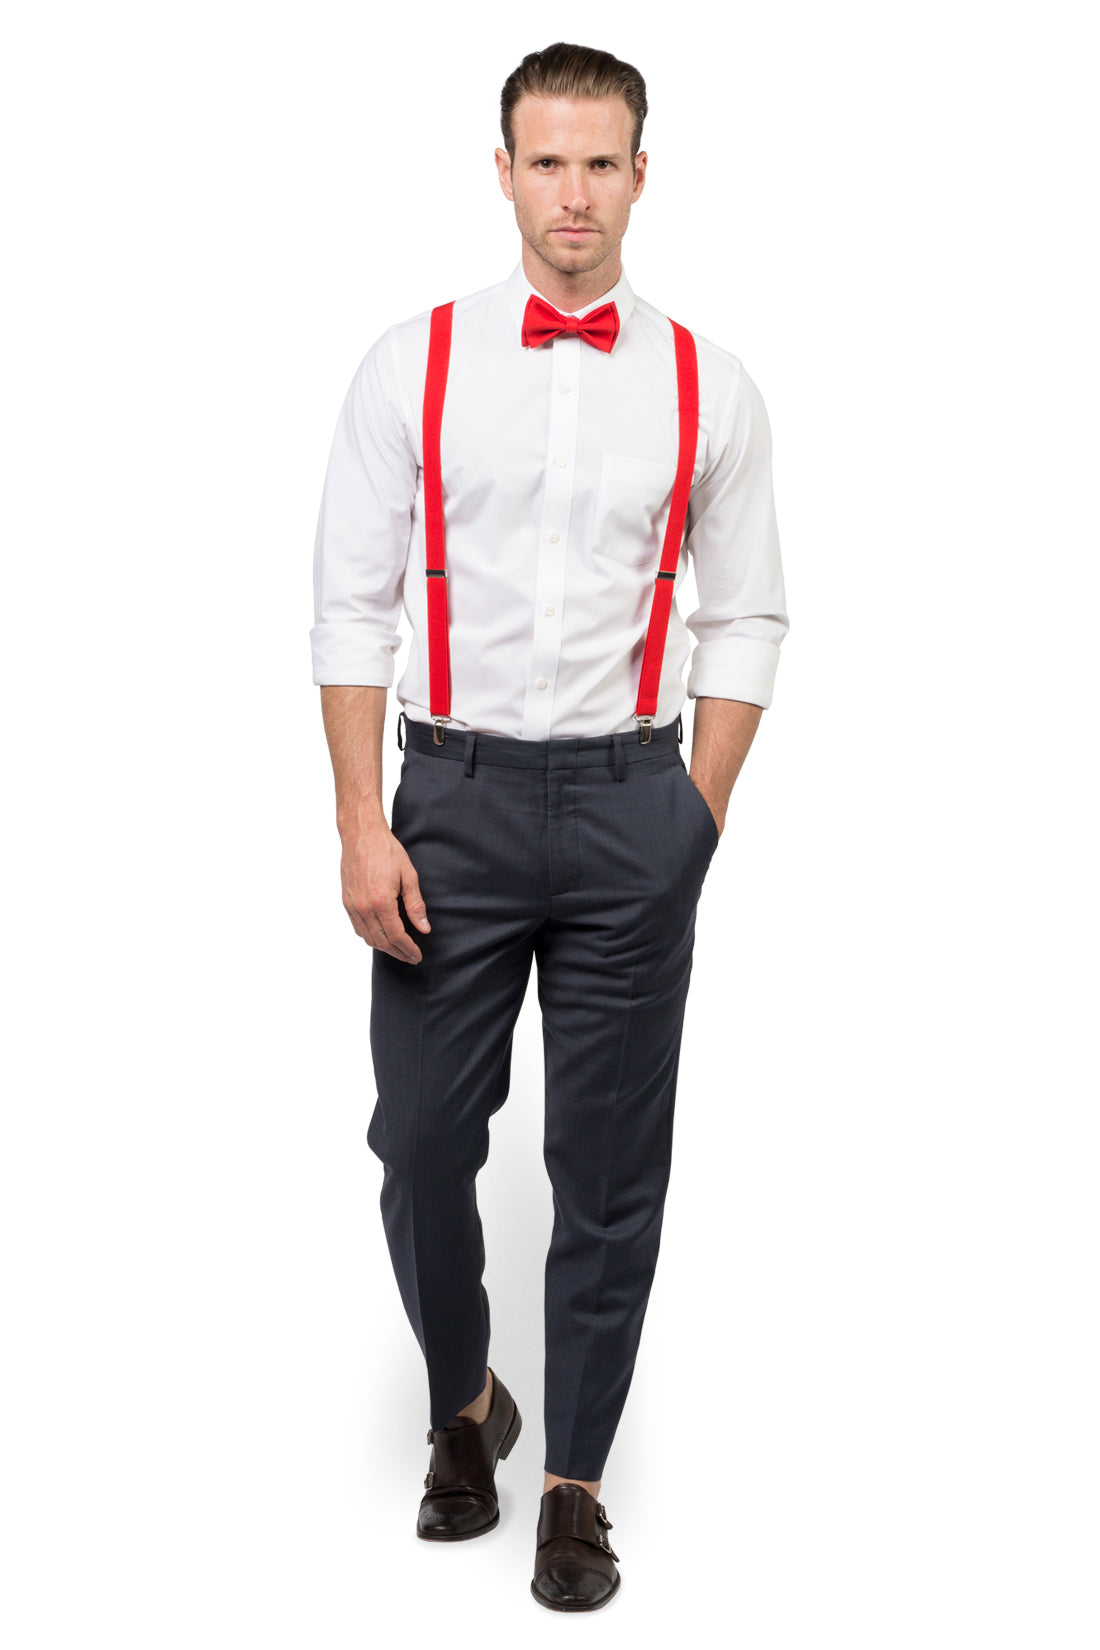 Red Suspenders & Red Bow Tie for Men - Armoniia